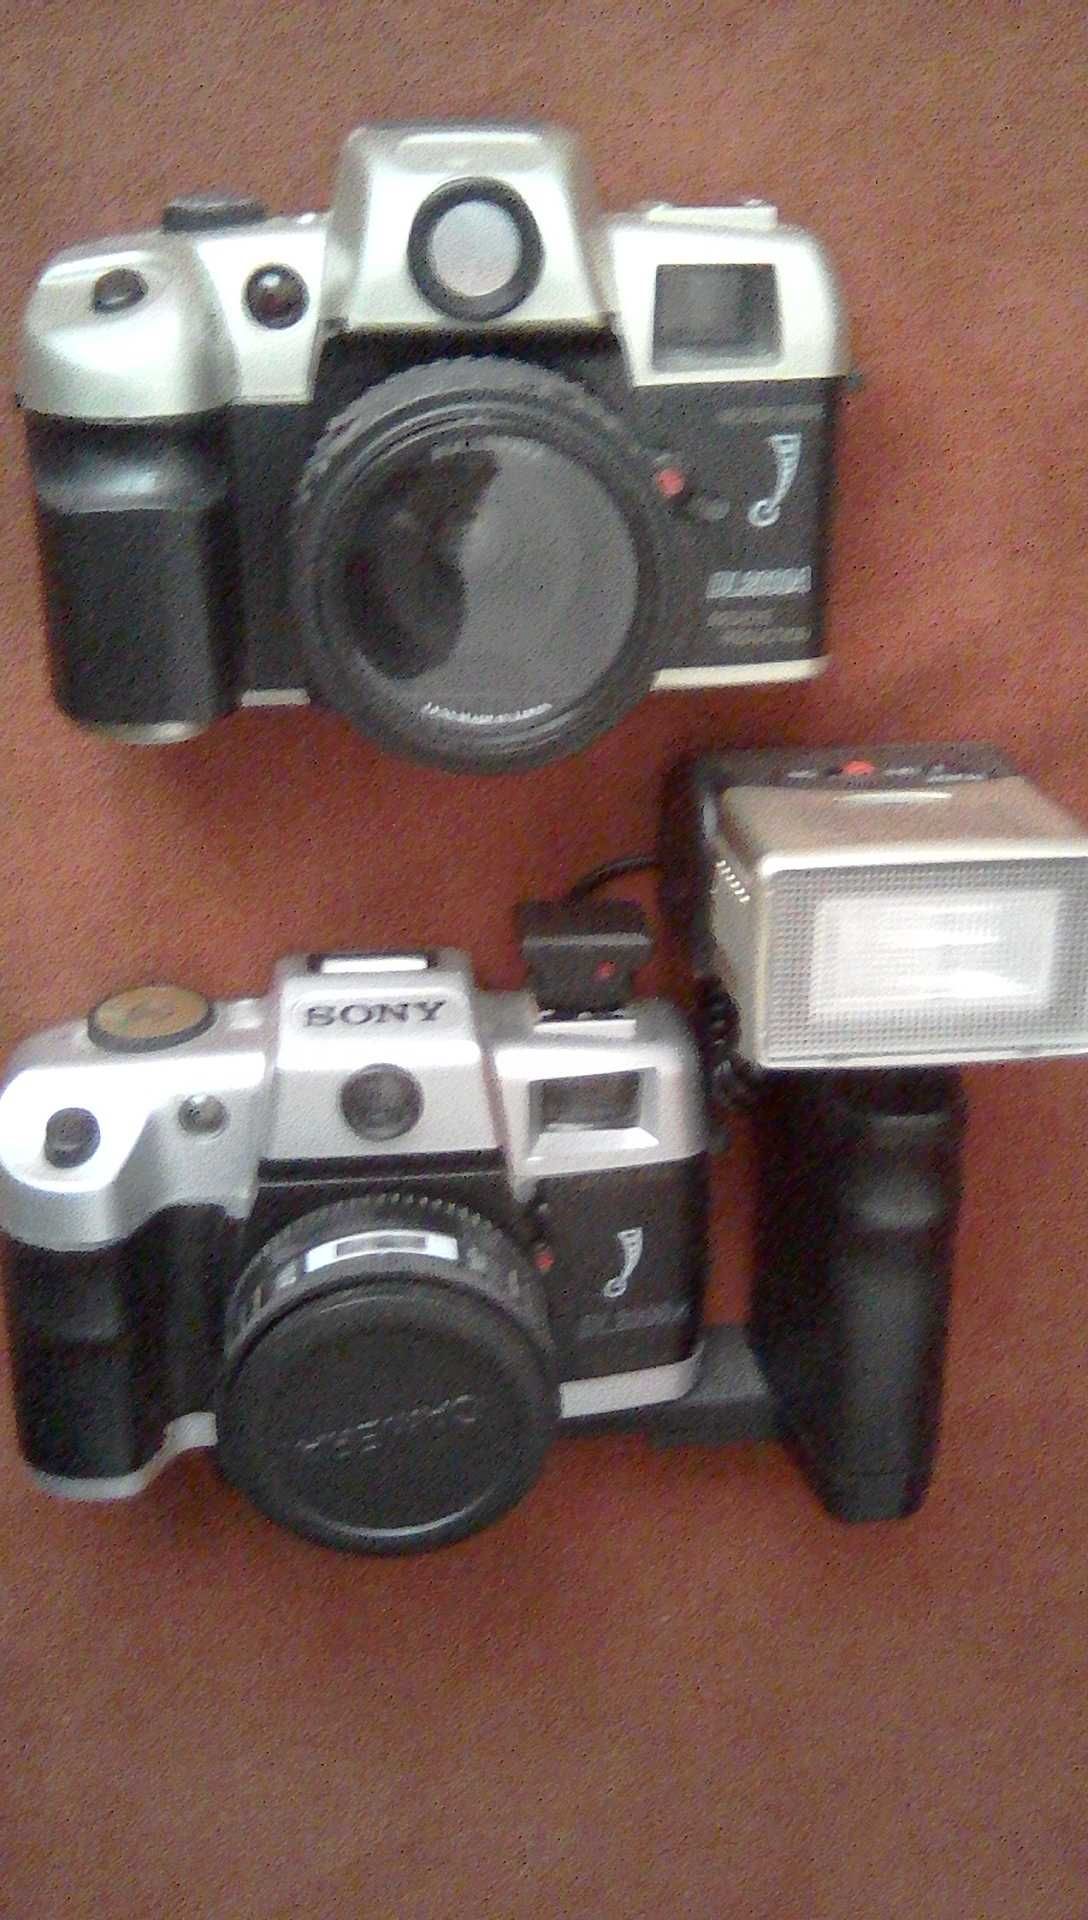 Aparate foto vechi, cu film, si blit (Sony si Olimpia)